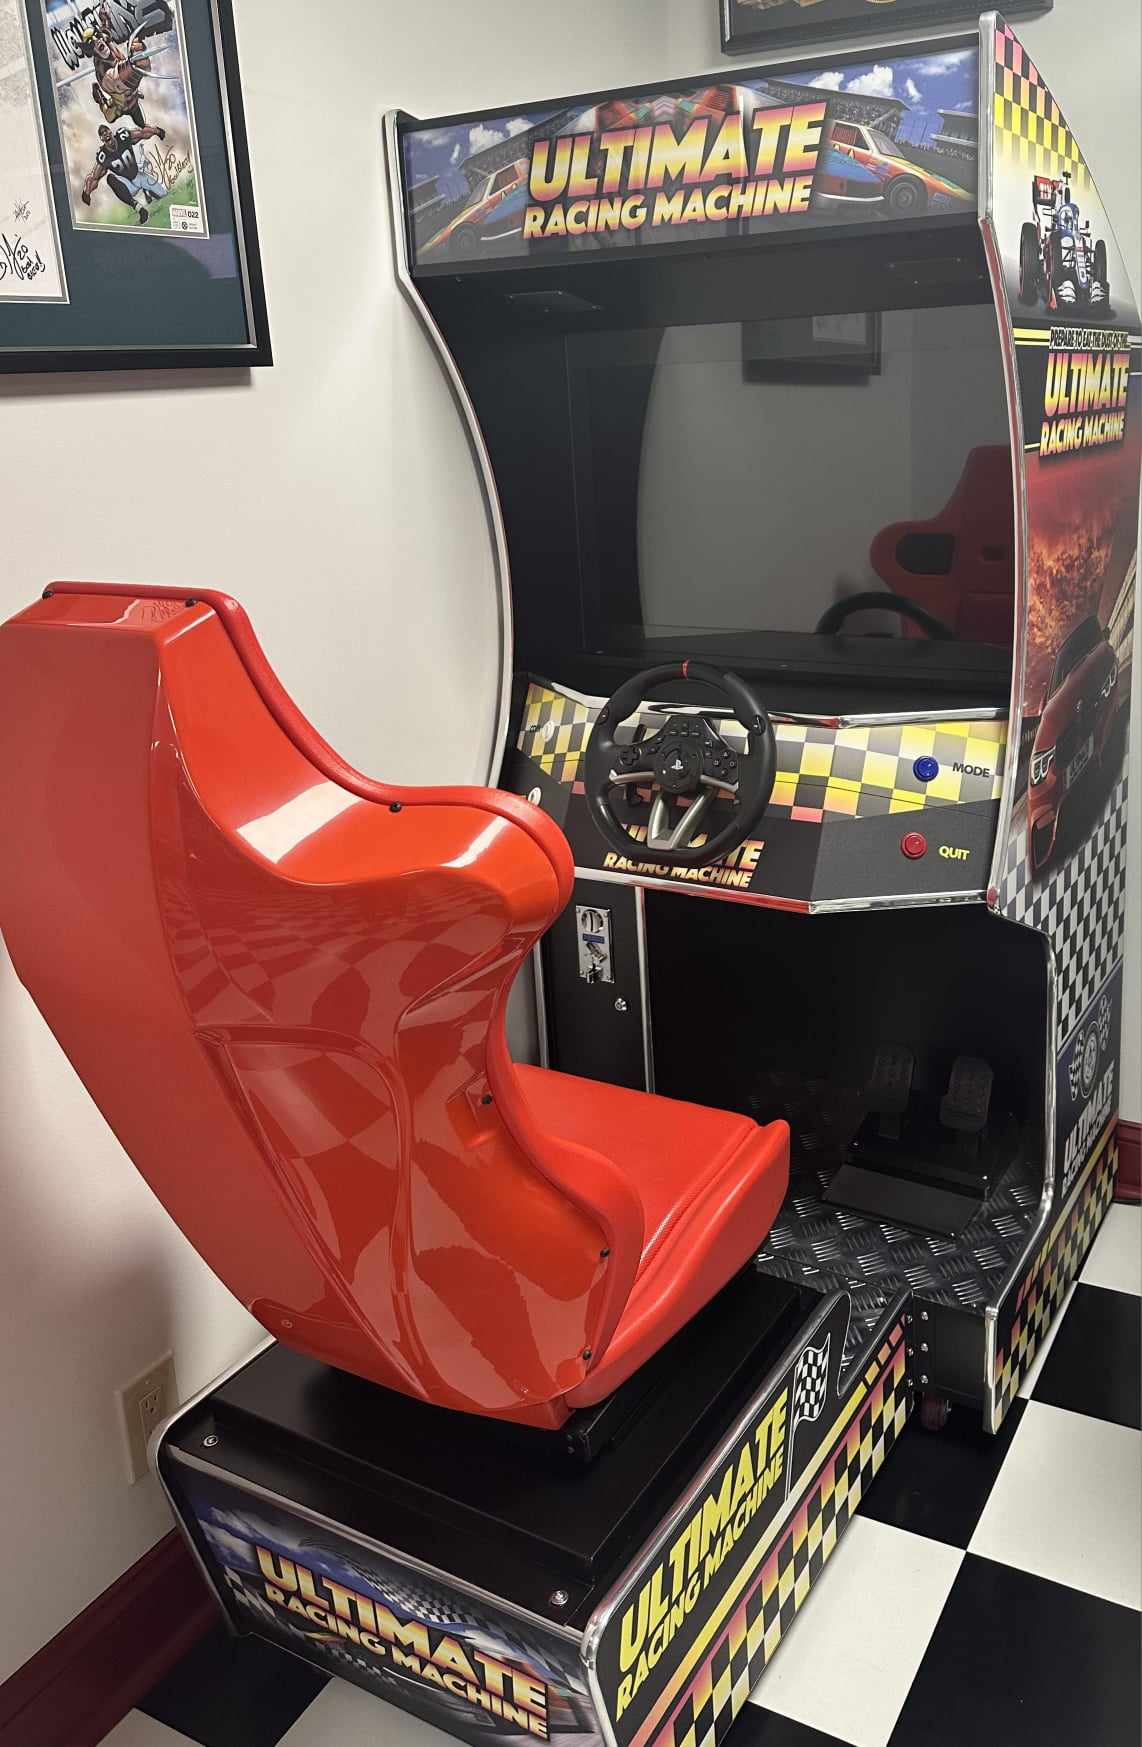 Prime Arcade Racing upgrade kit WITH 1133 RACING GAMES